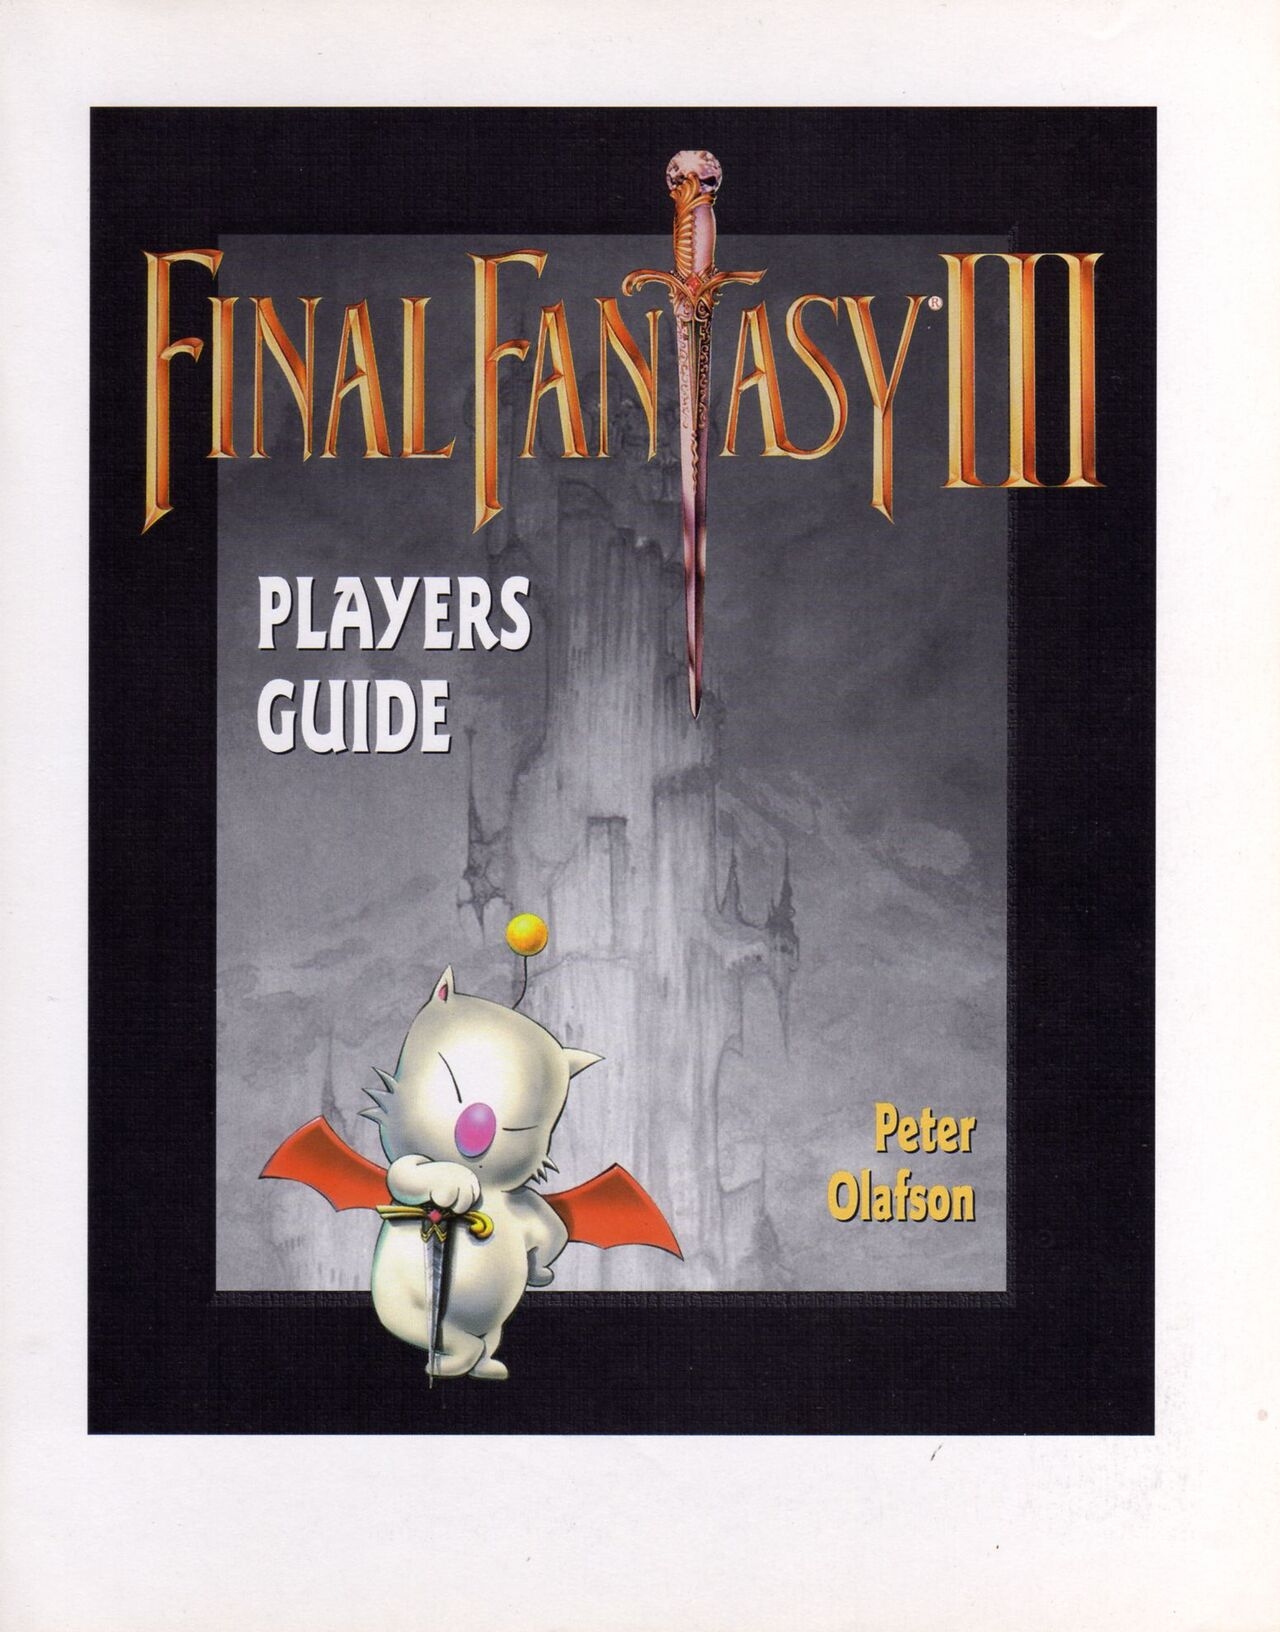 Final Fantasy III Players Guide 1